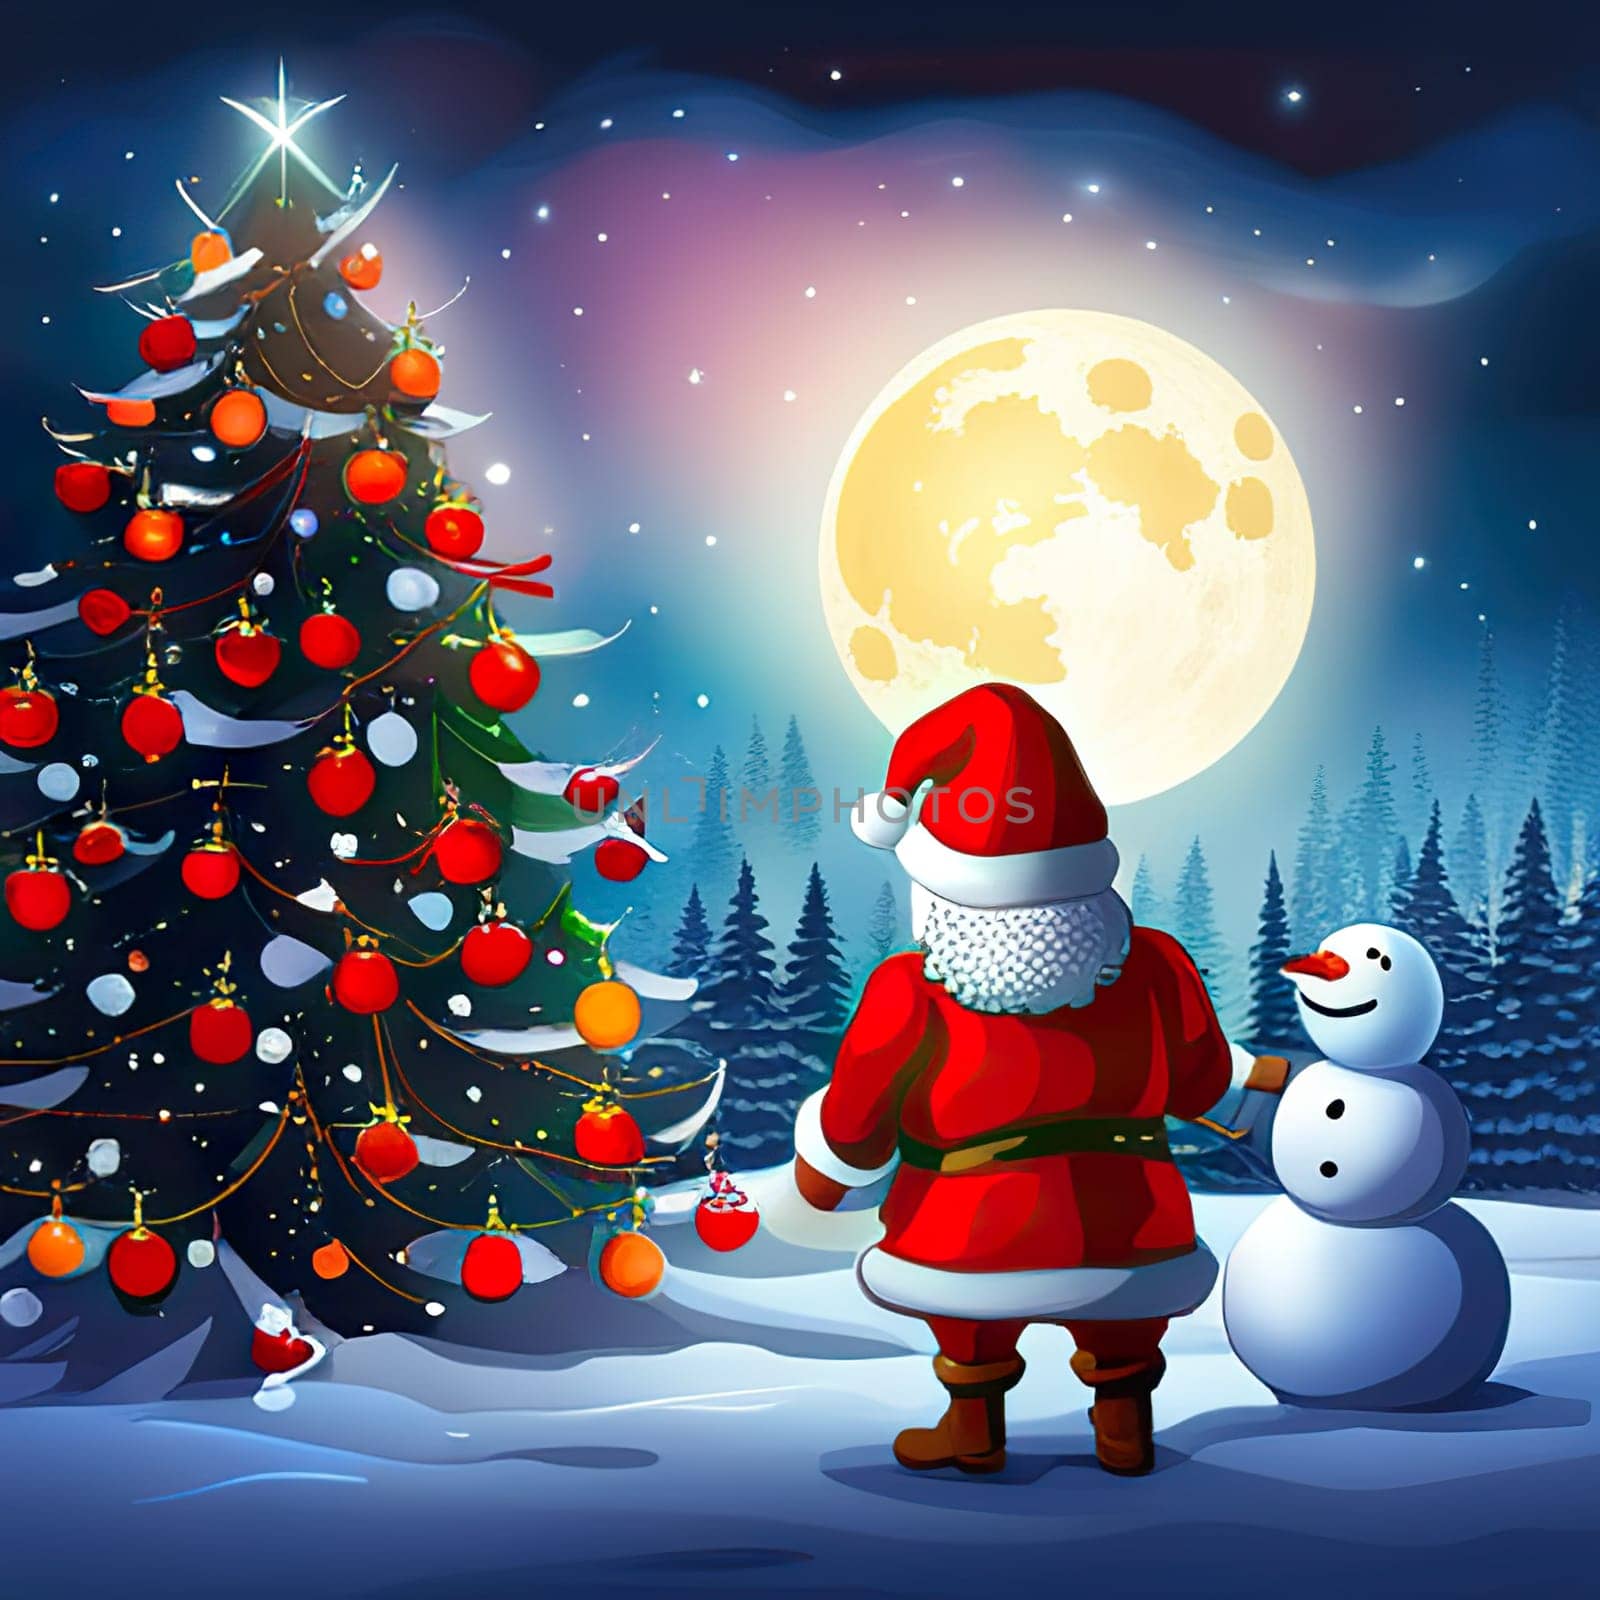 Merry Christmas and happy new year cartoon Illustration of Santa Claus by EkaterinaPereslavtseva